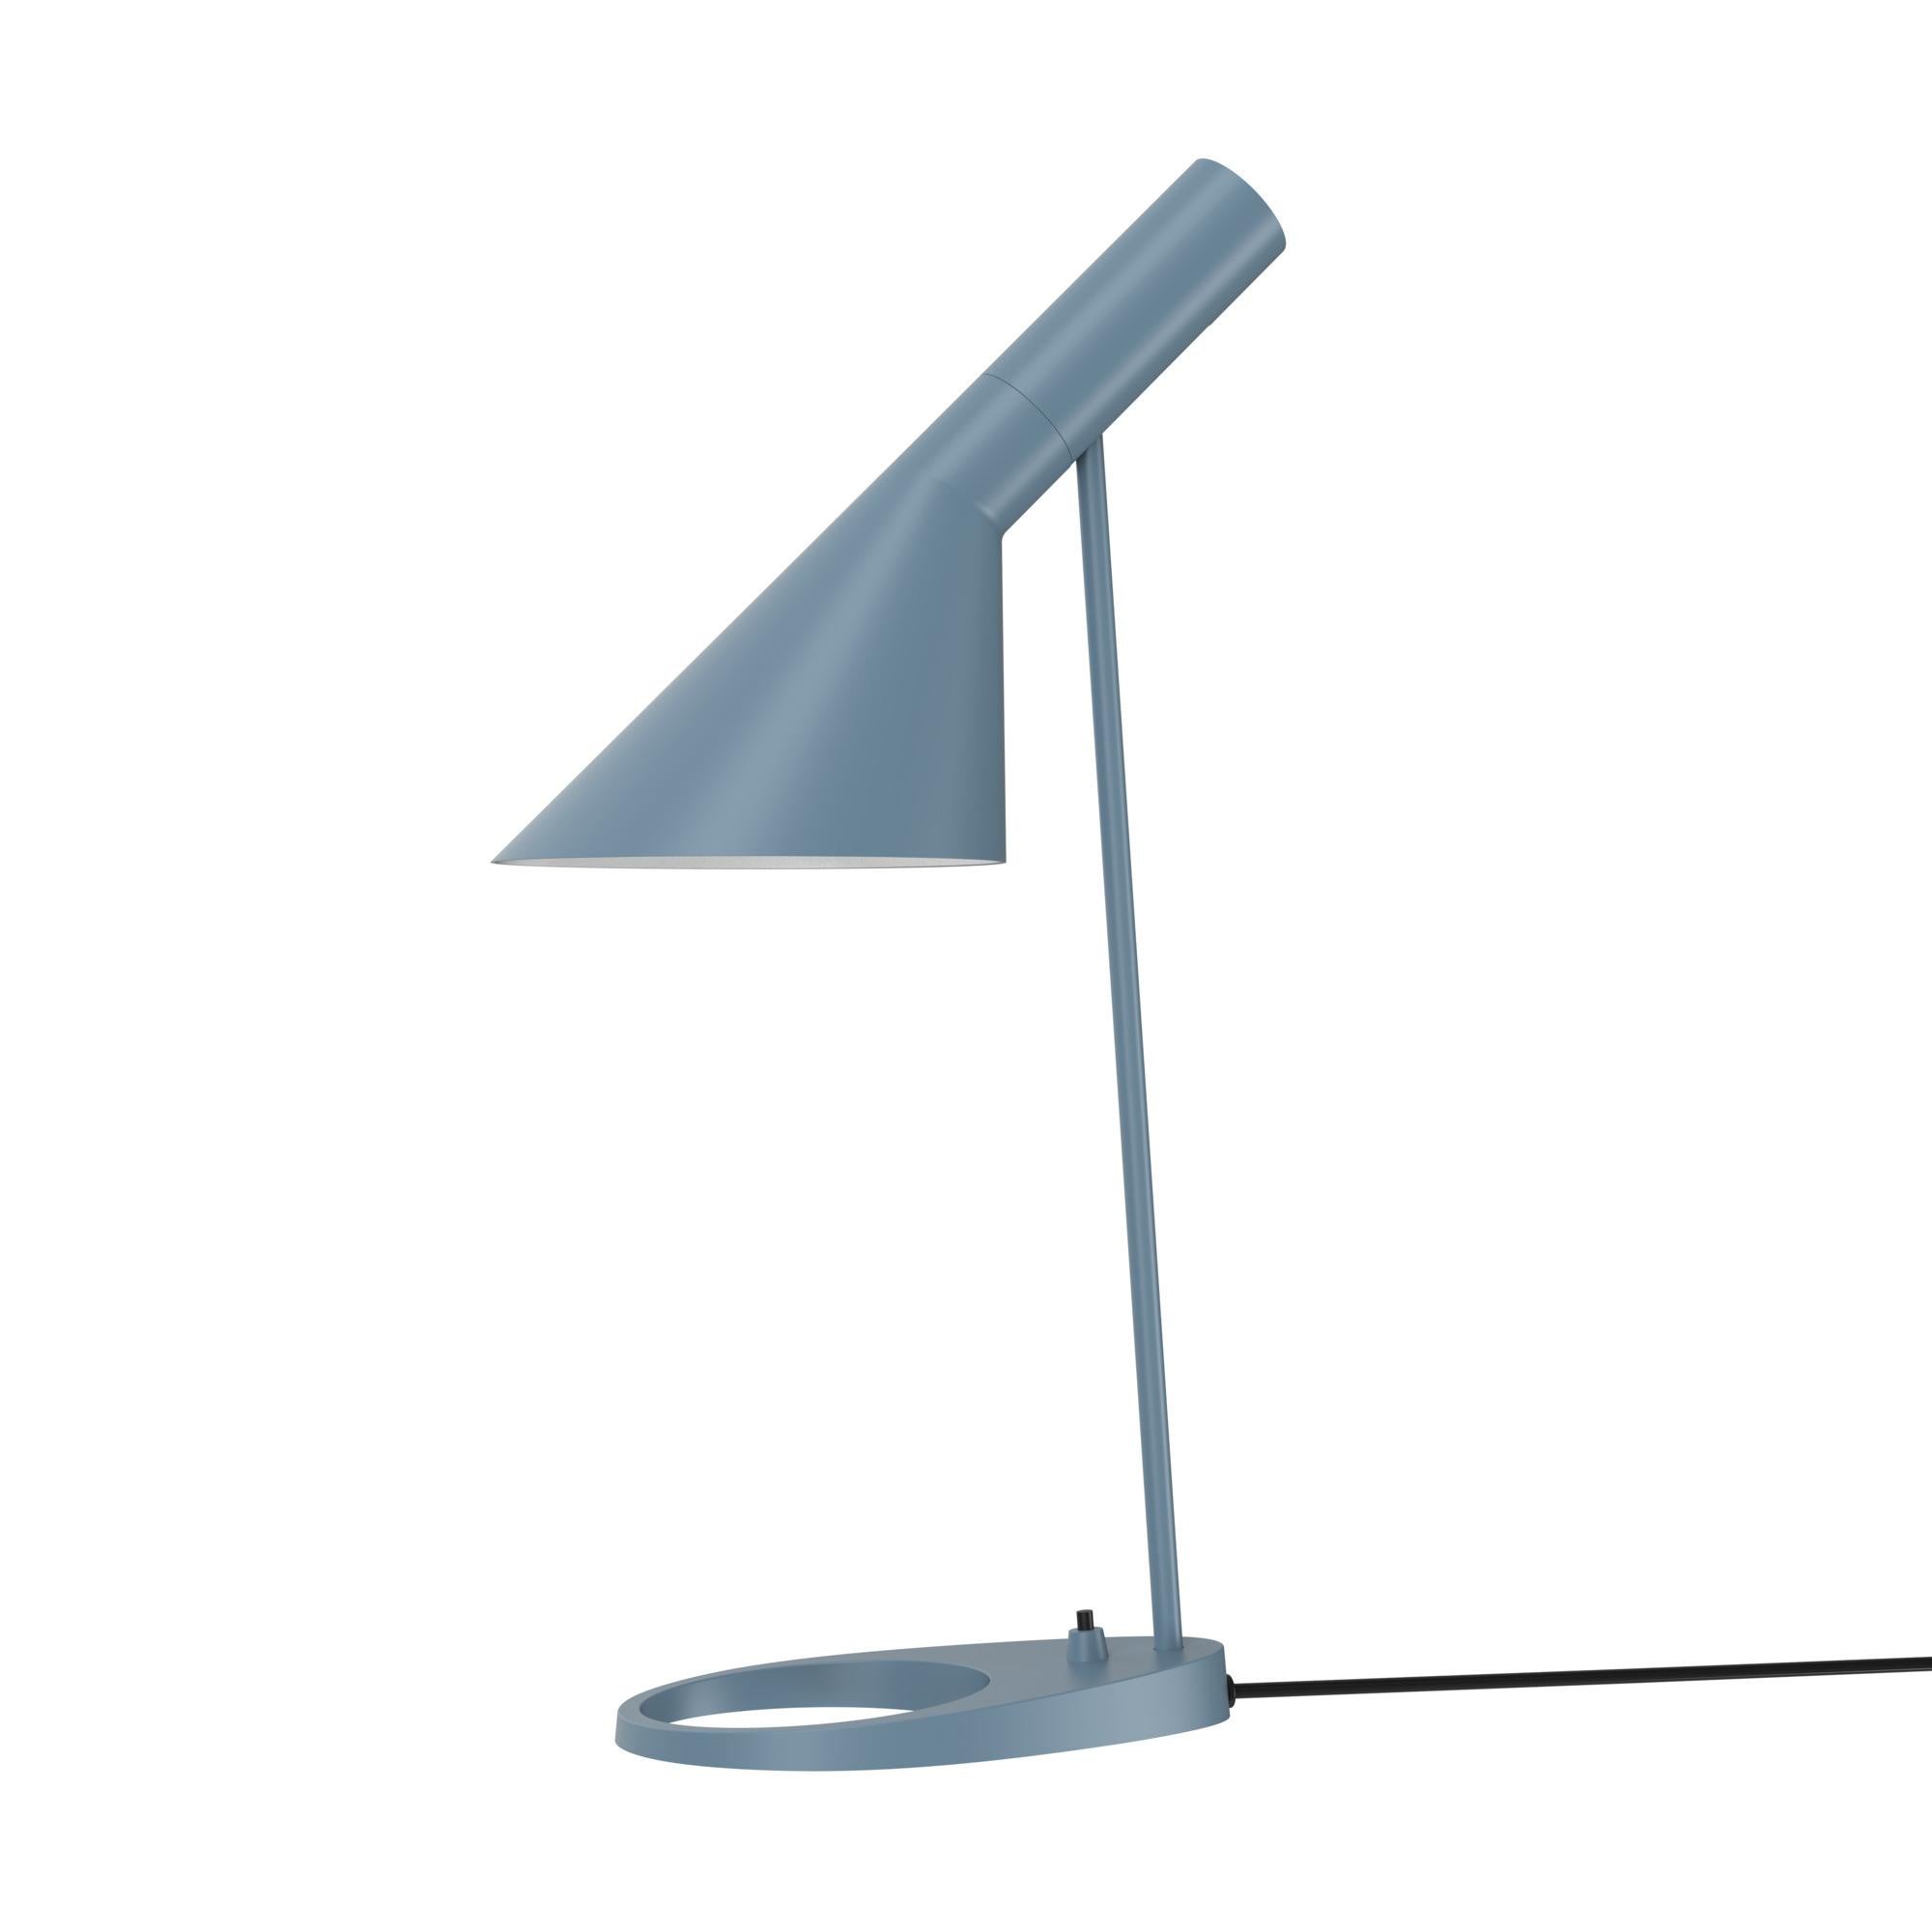 Arne Jacobsen AJ Table Lamp in Warm Sand for Louis Poulsen For Sale 2